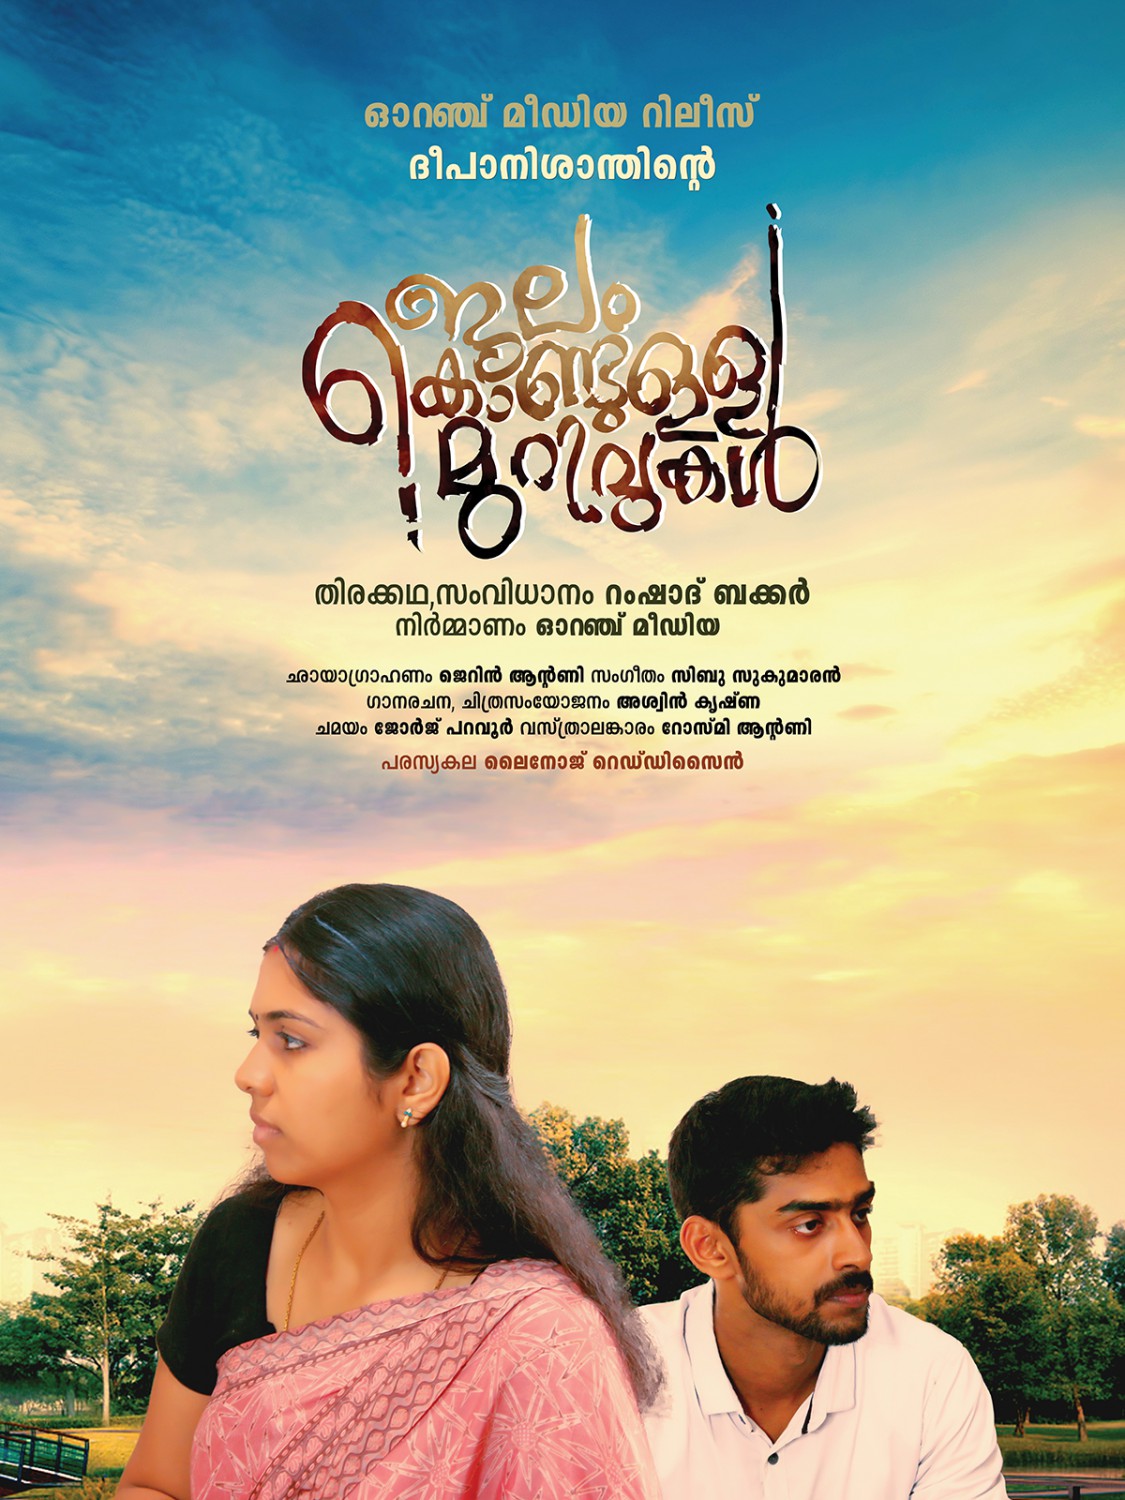 Extra Large Movie Poster Image for Jalam Kondulla Murivukal